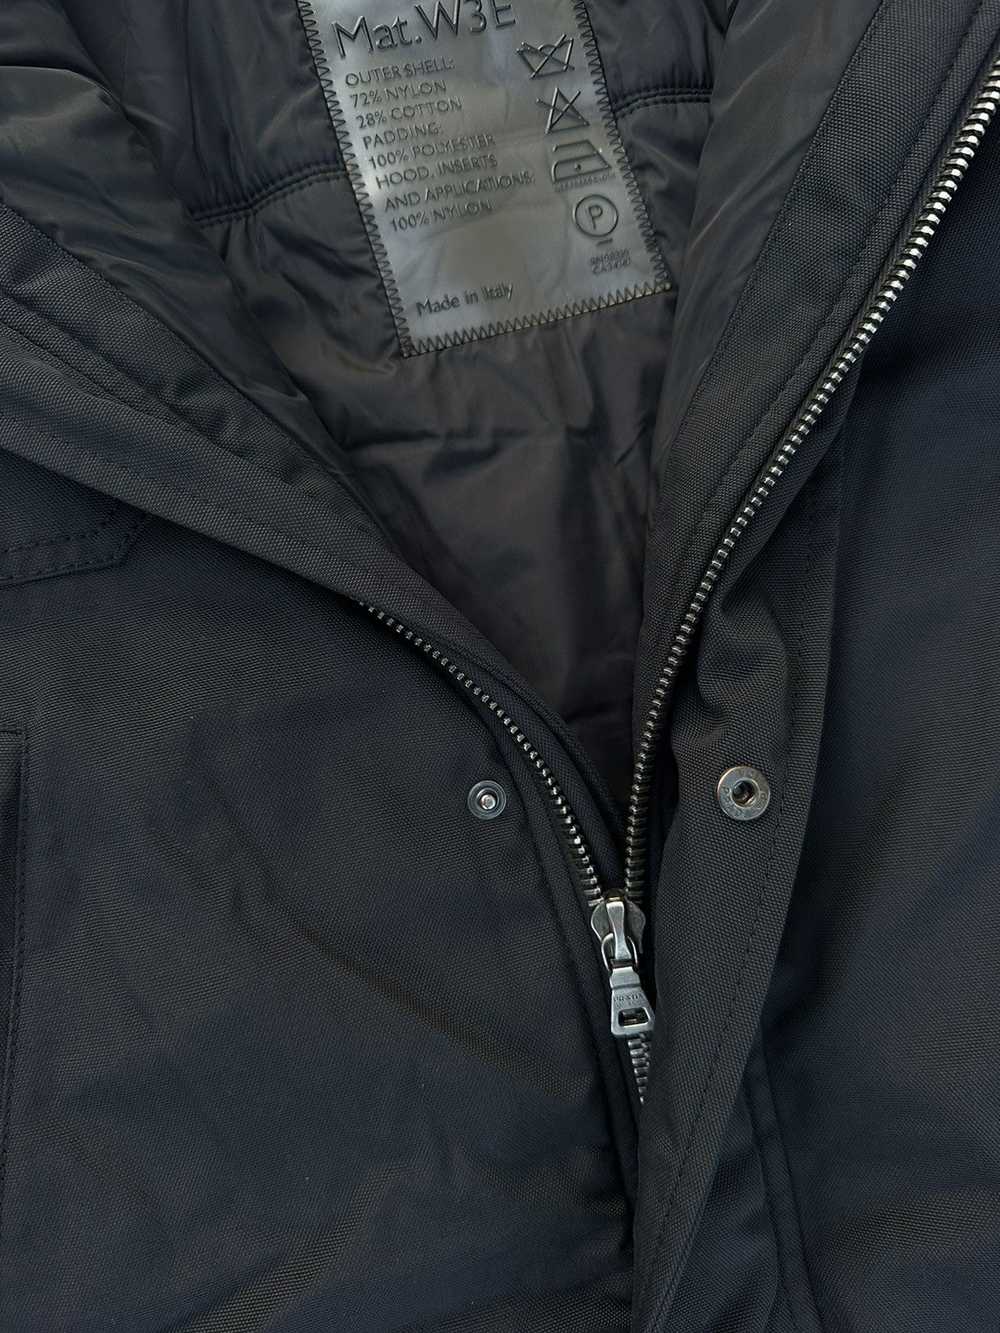 Prada Prada Heavy Duty Jacket Black - image 8